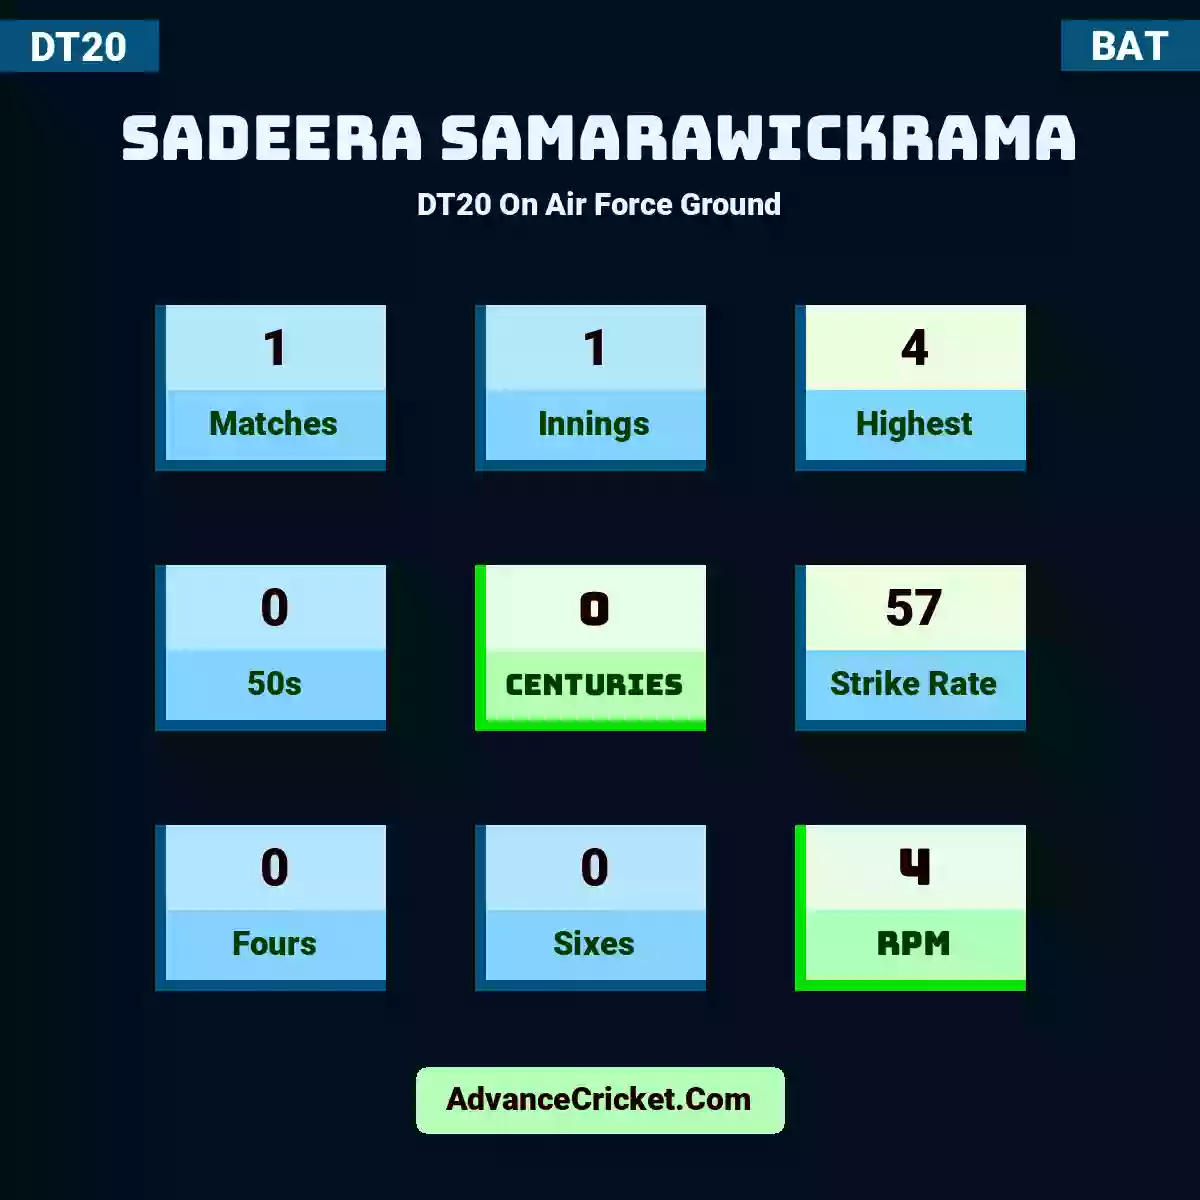 Sadeera Samarawickrama DT20  On Air Force Ground, Sadeera Samarawickrama played 1 matches, scored 4 runs as highest, 0 half-centuries, and 0 centuries, with a strike rate of 57. S.Samarawickrama hit 0 fours and 0 sixes, with an RPM of 4.